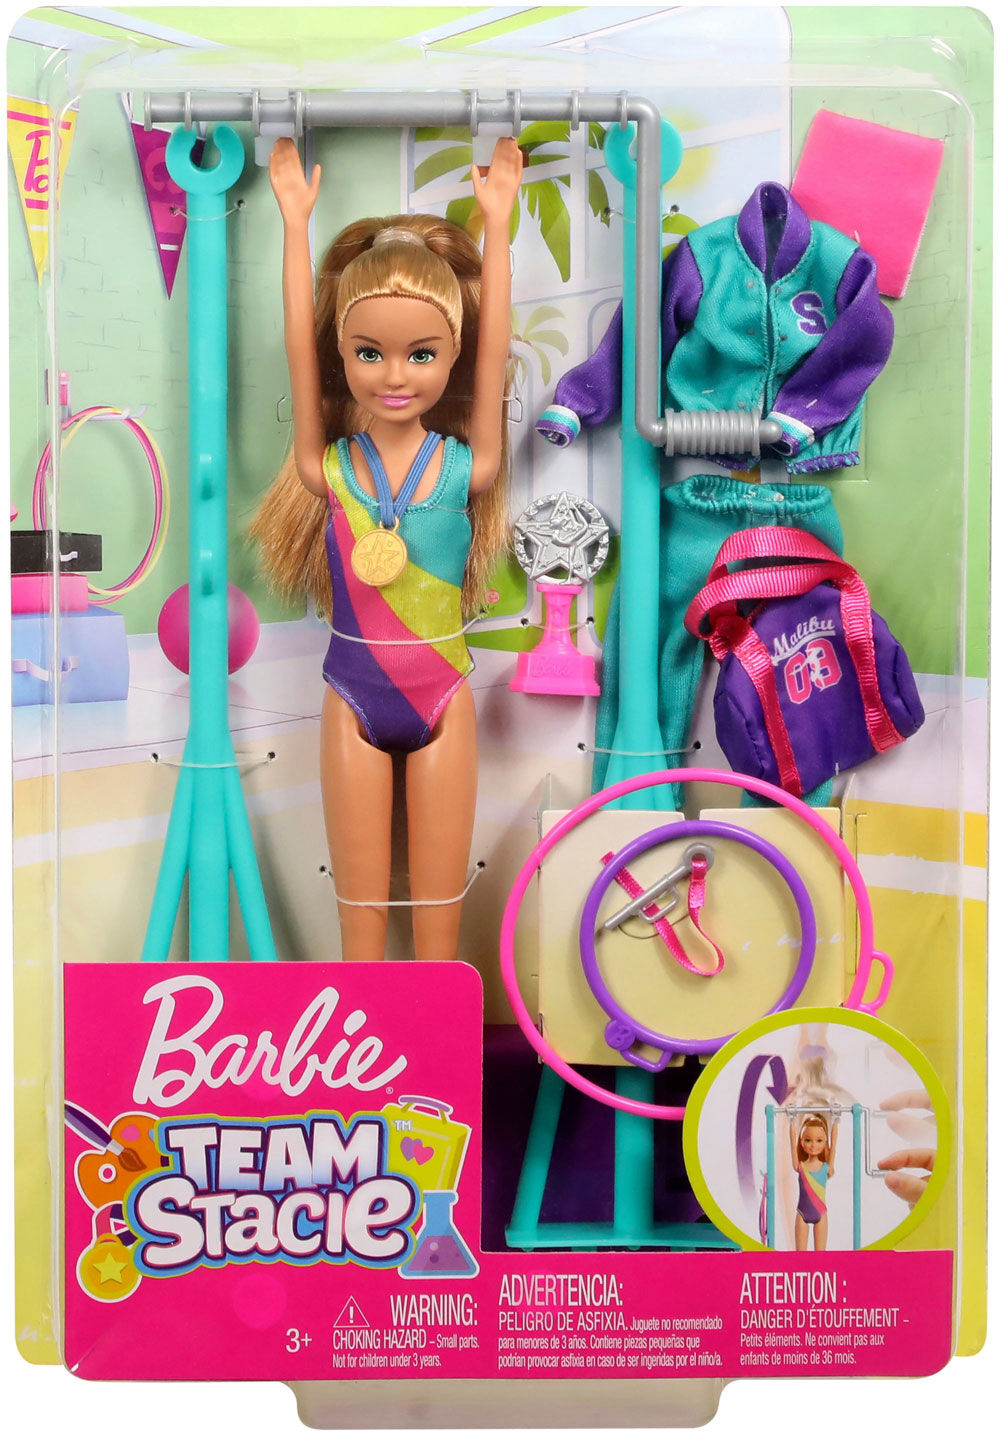 barbie team stacy